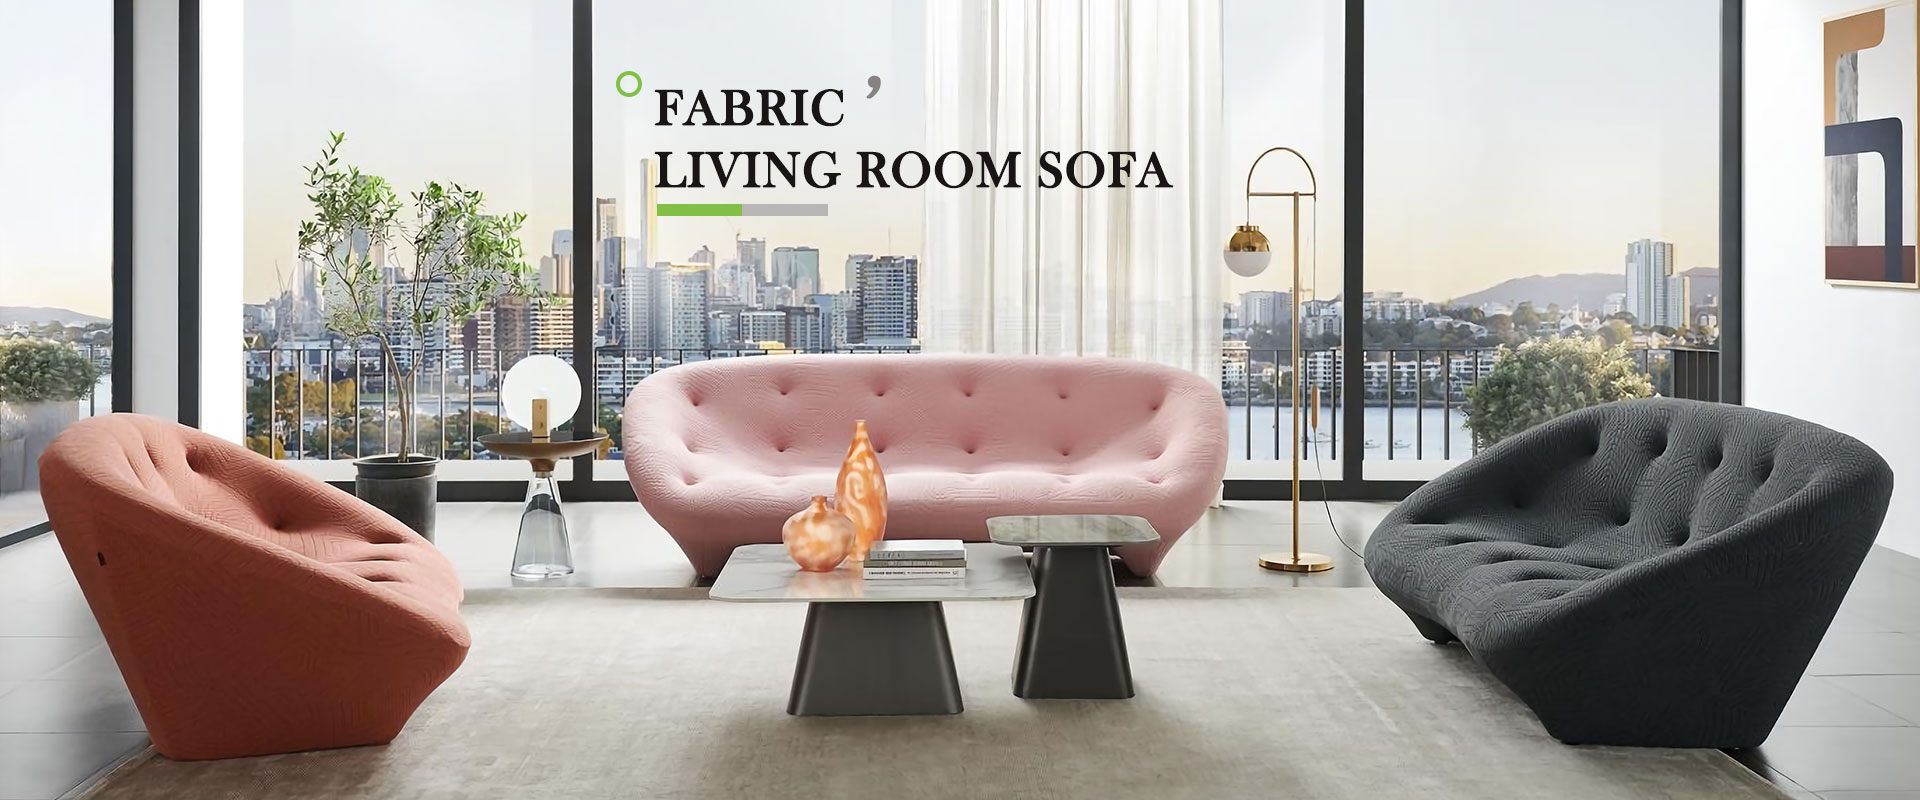 China Fabric Living Room Sofa Factory